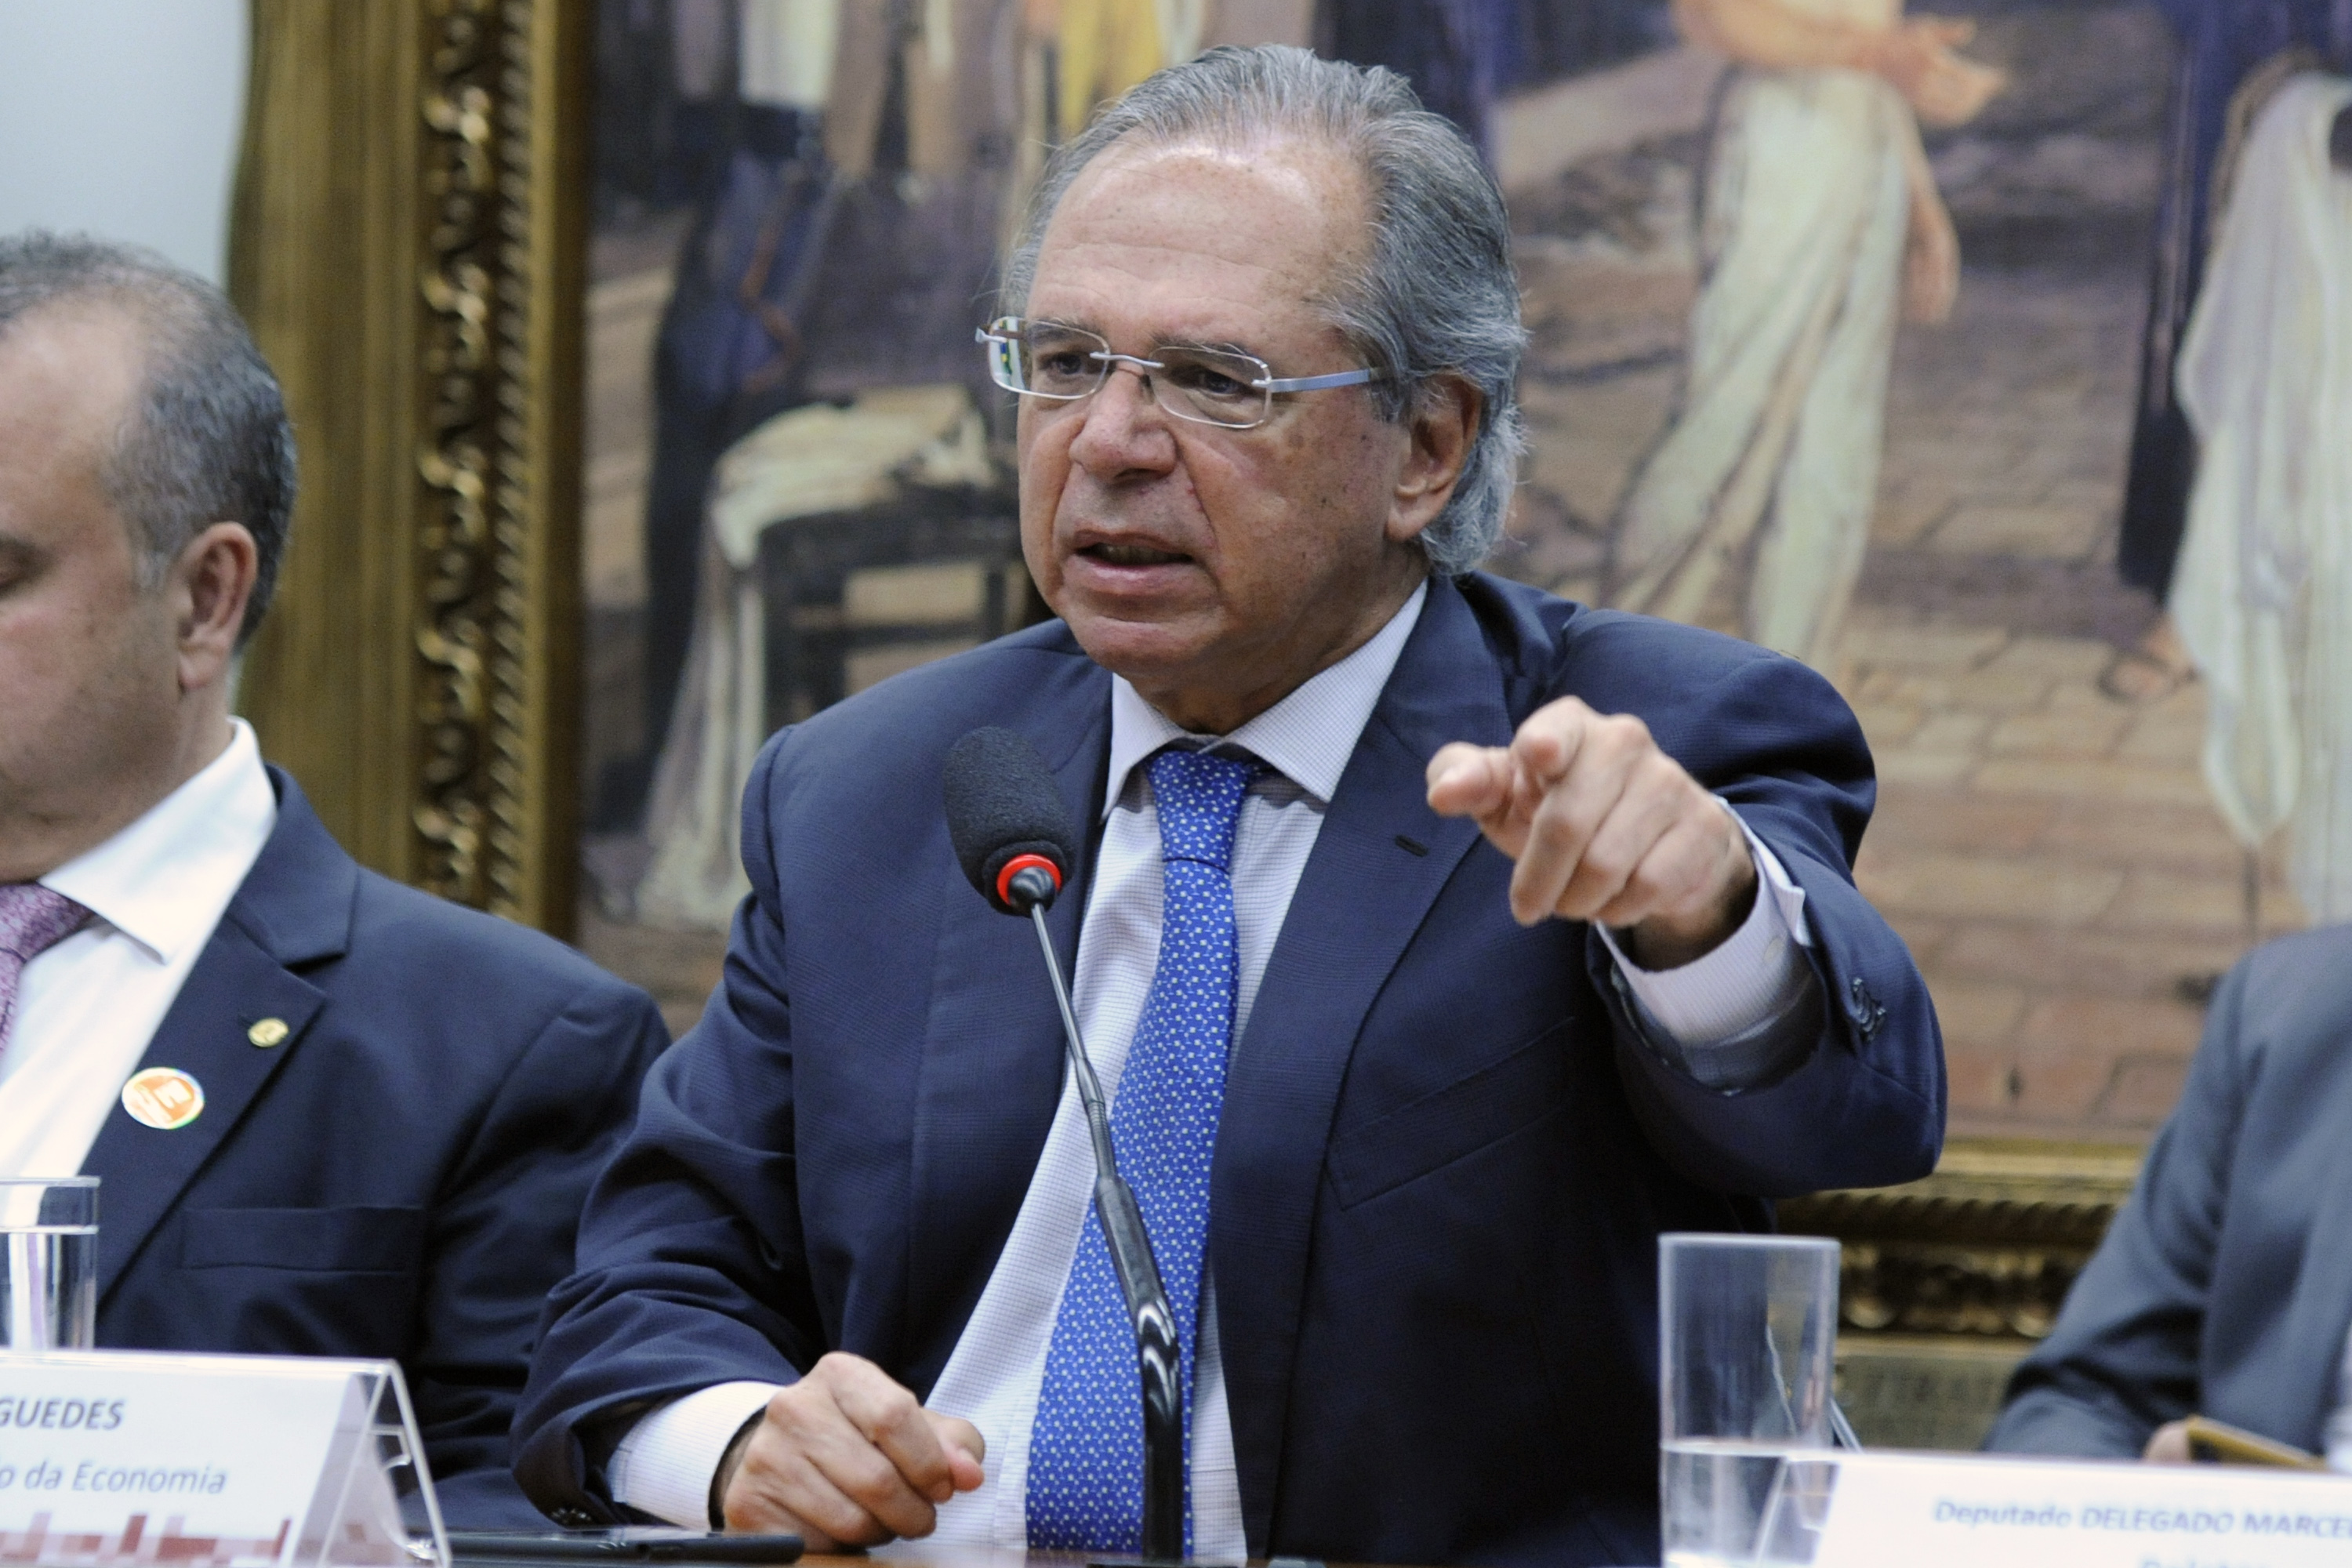 O ministro da Economia, Paulo Guedes: pacote coronavírus